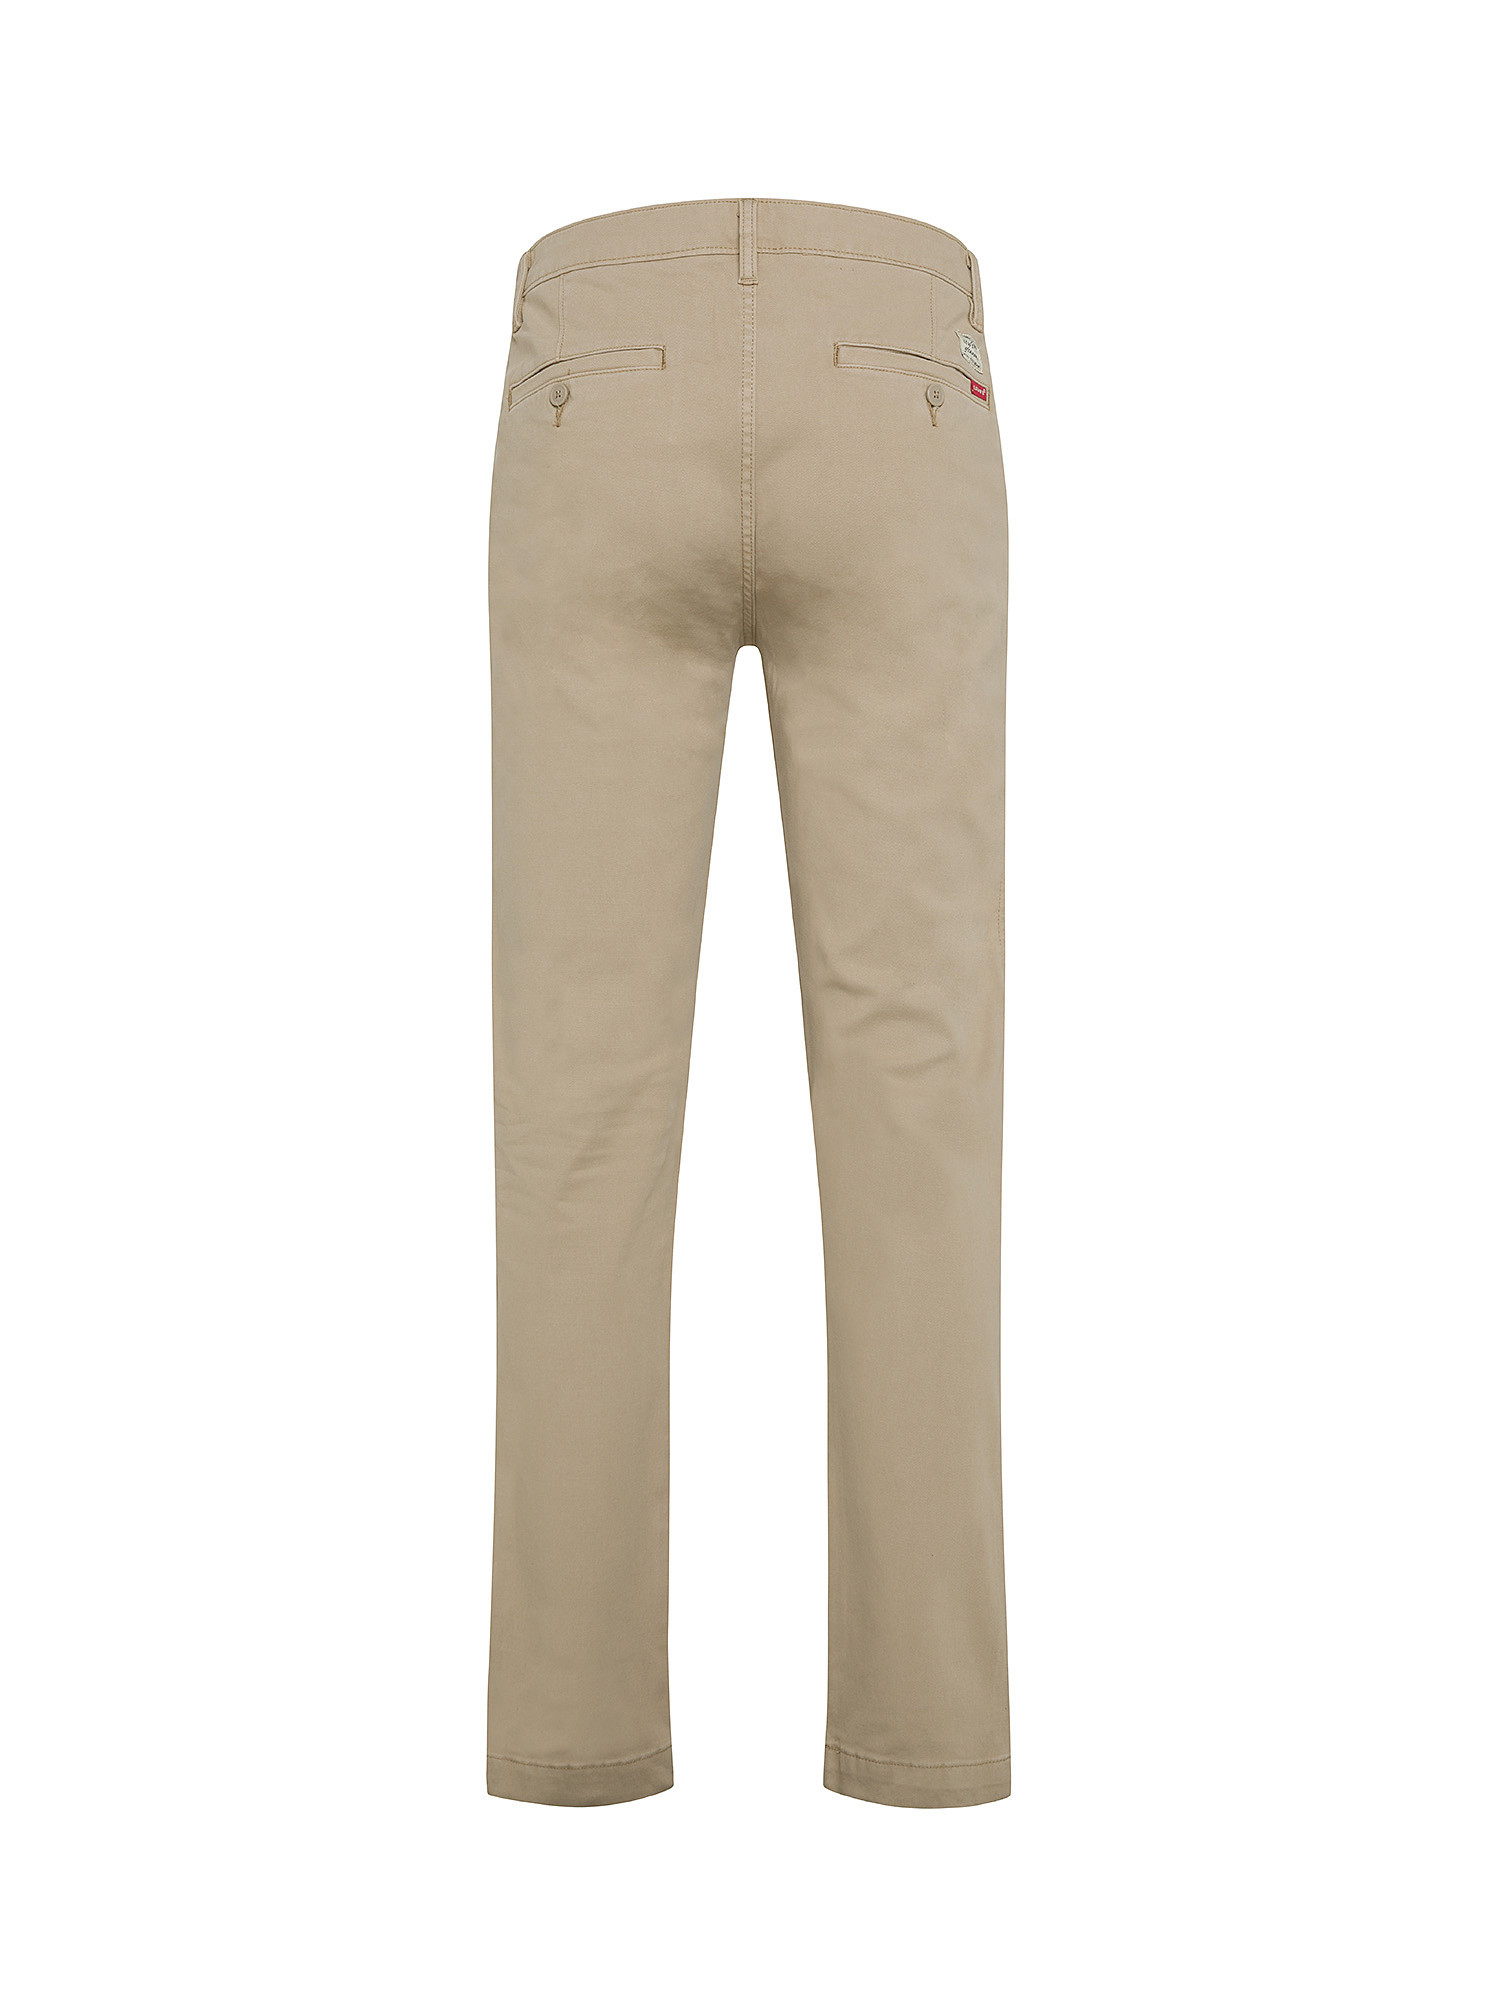 Levi's - Pantaloni chino slim fit, Beige chiaro, large image number 1